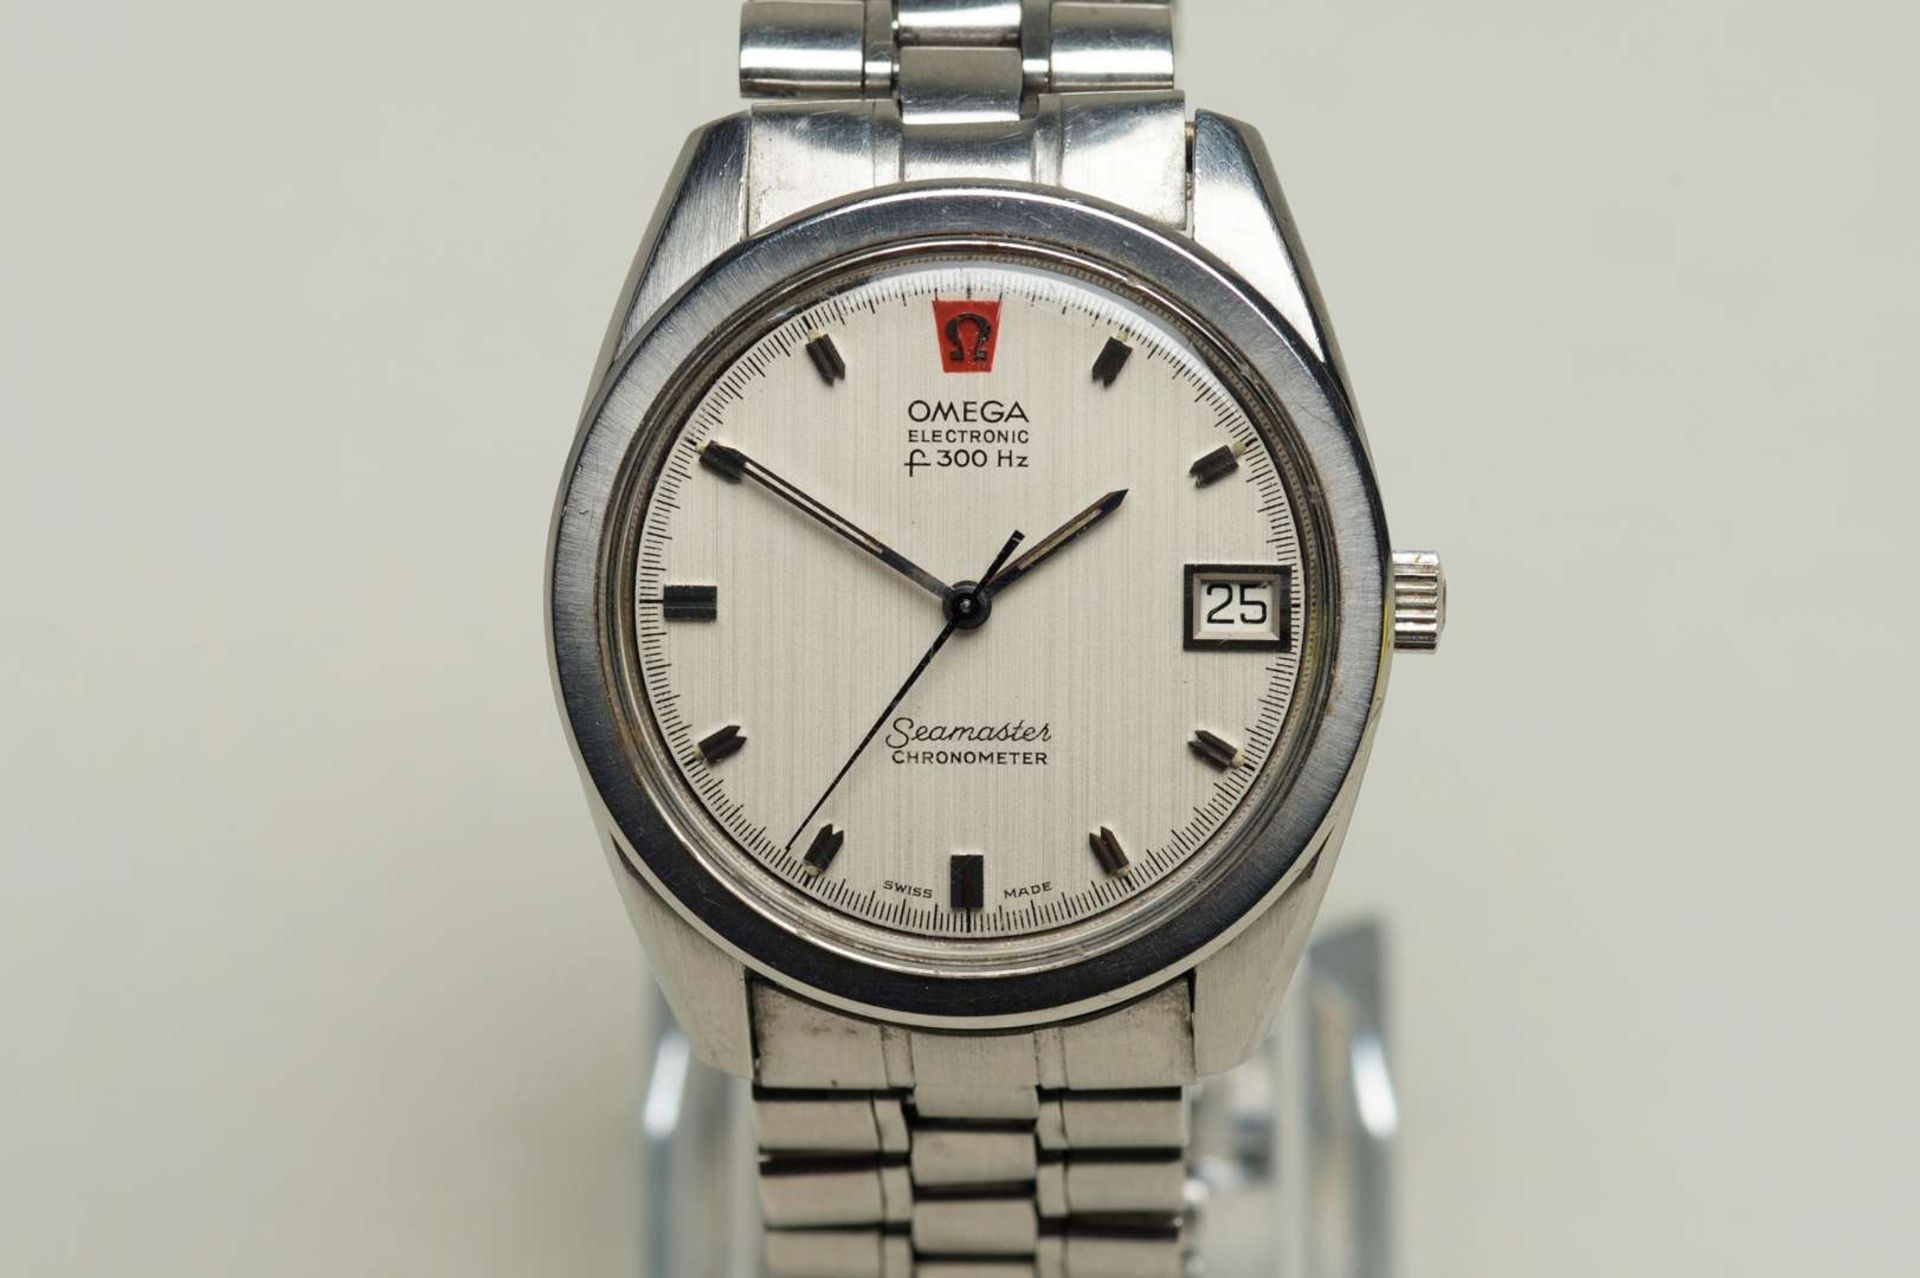 OMEGA. 1970's Seamaster, Chronometer, Electronic f300 Hz, stainless steel calendar wristwatch.